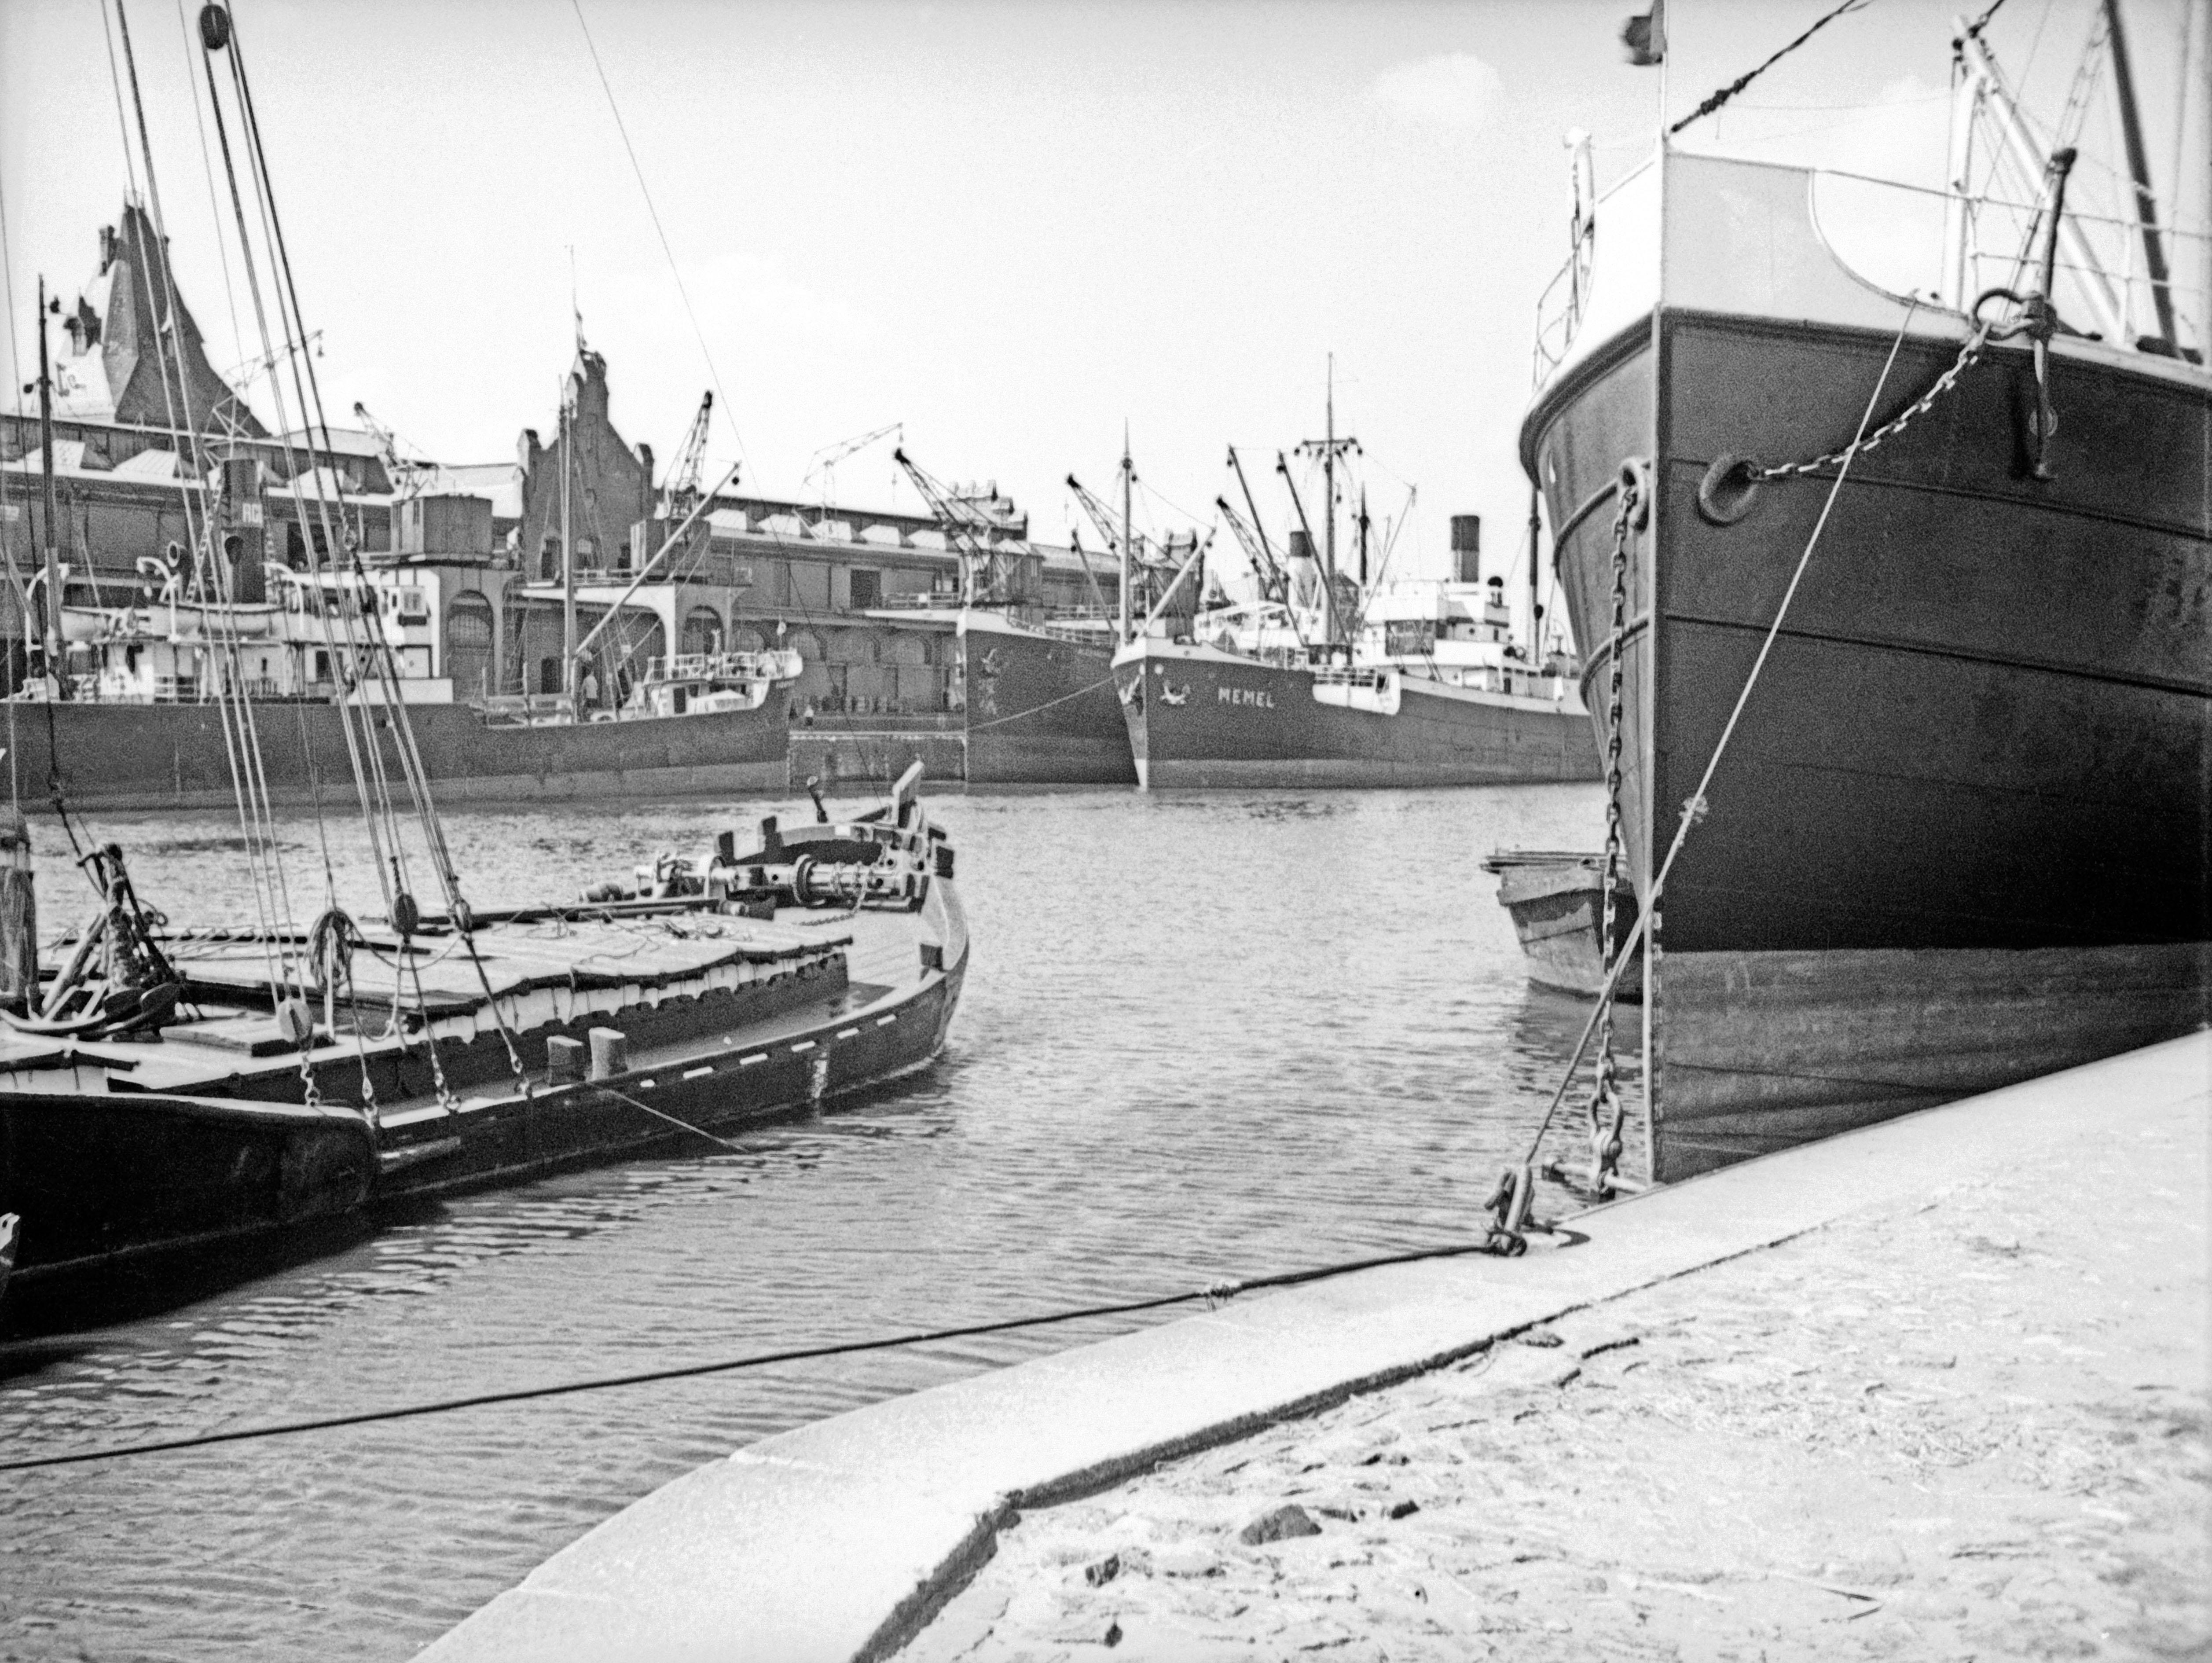 Karl Heinrich Lämmel Black and White Photograph - Ships at the inner harbor of Koenigsberg, Germany 1934 Printed Later 